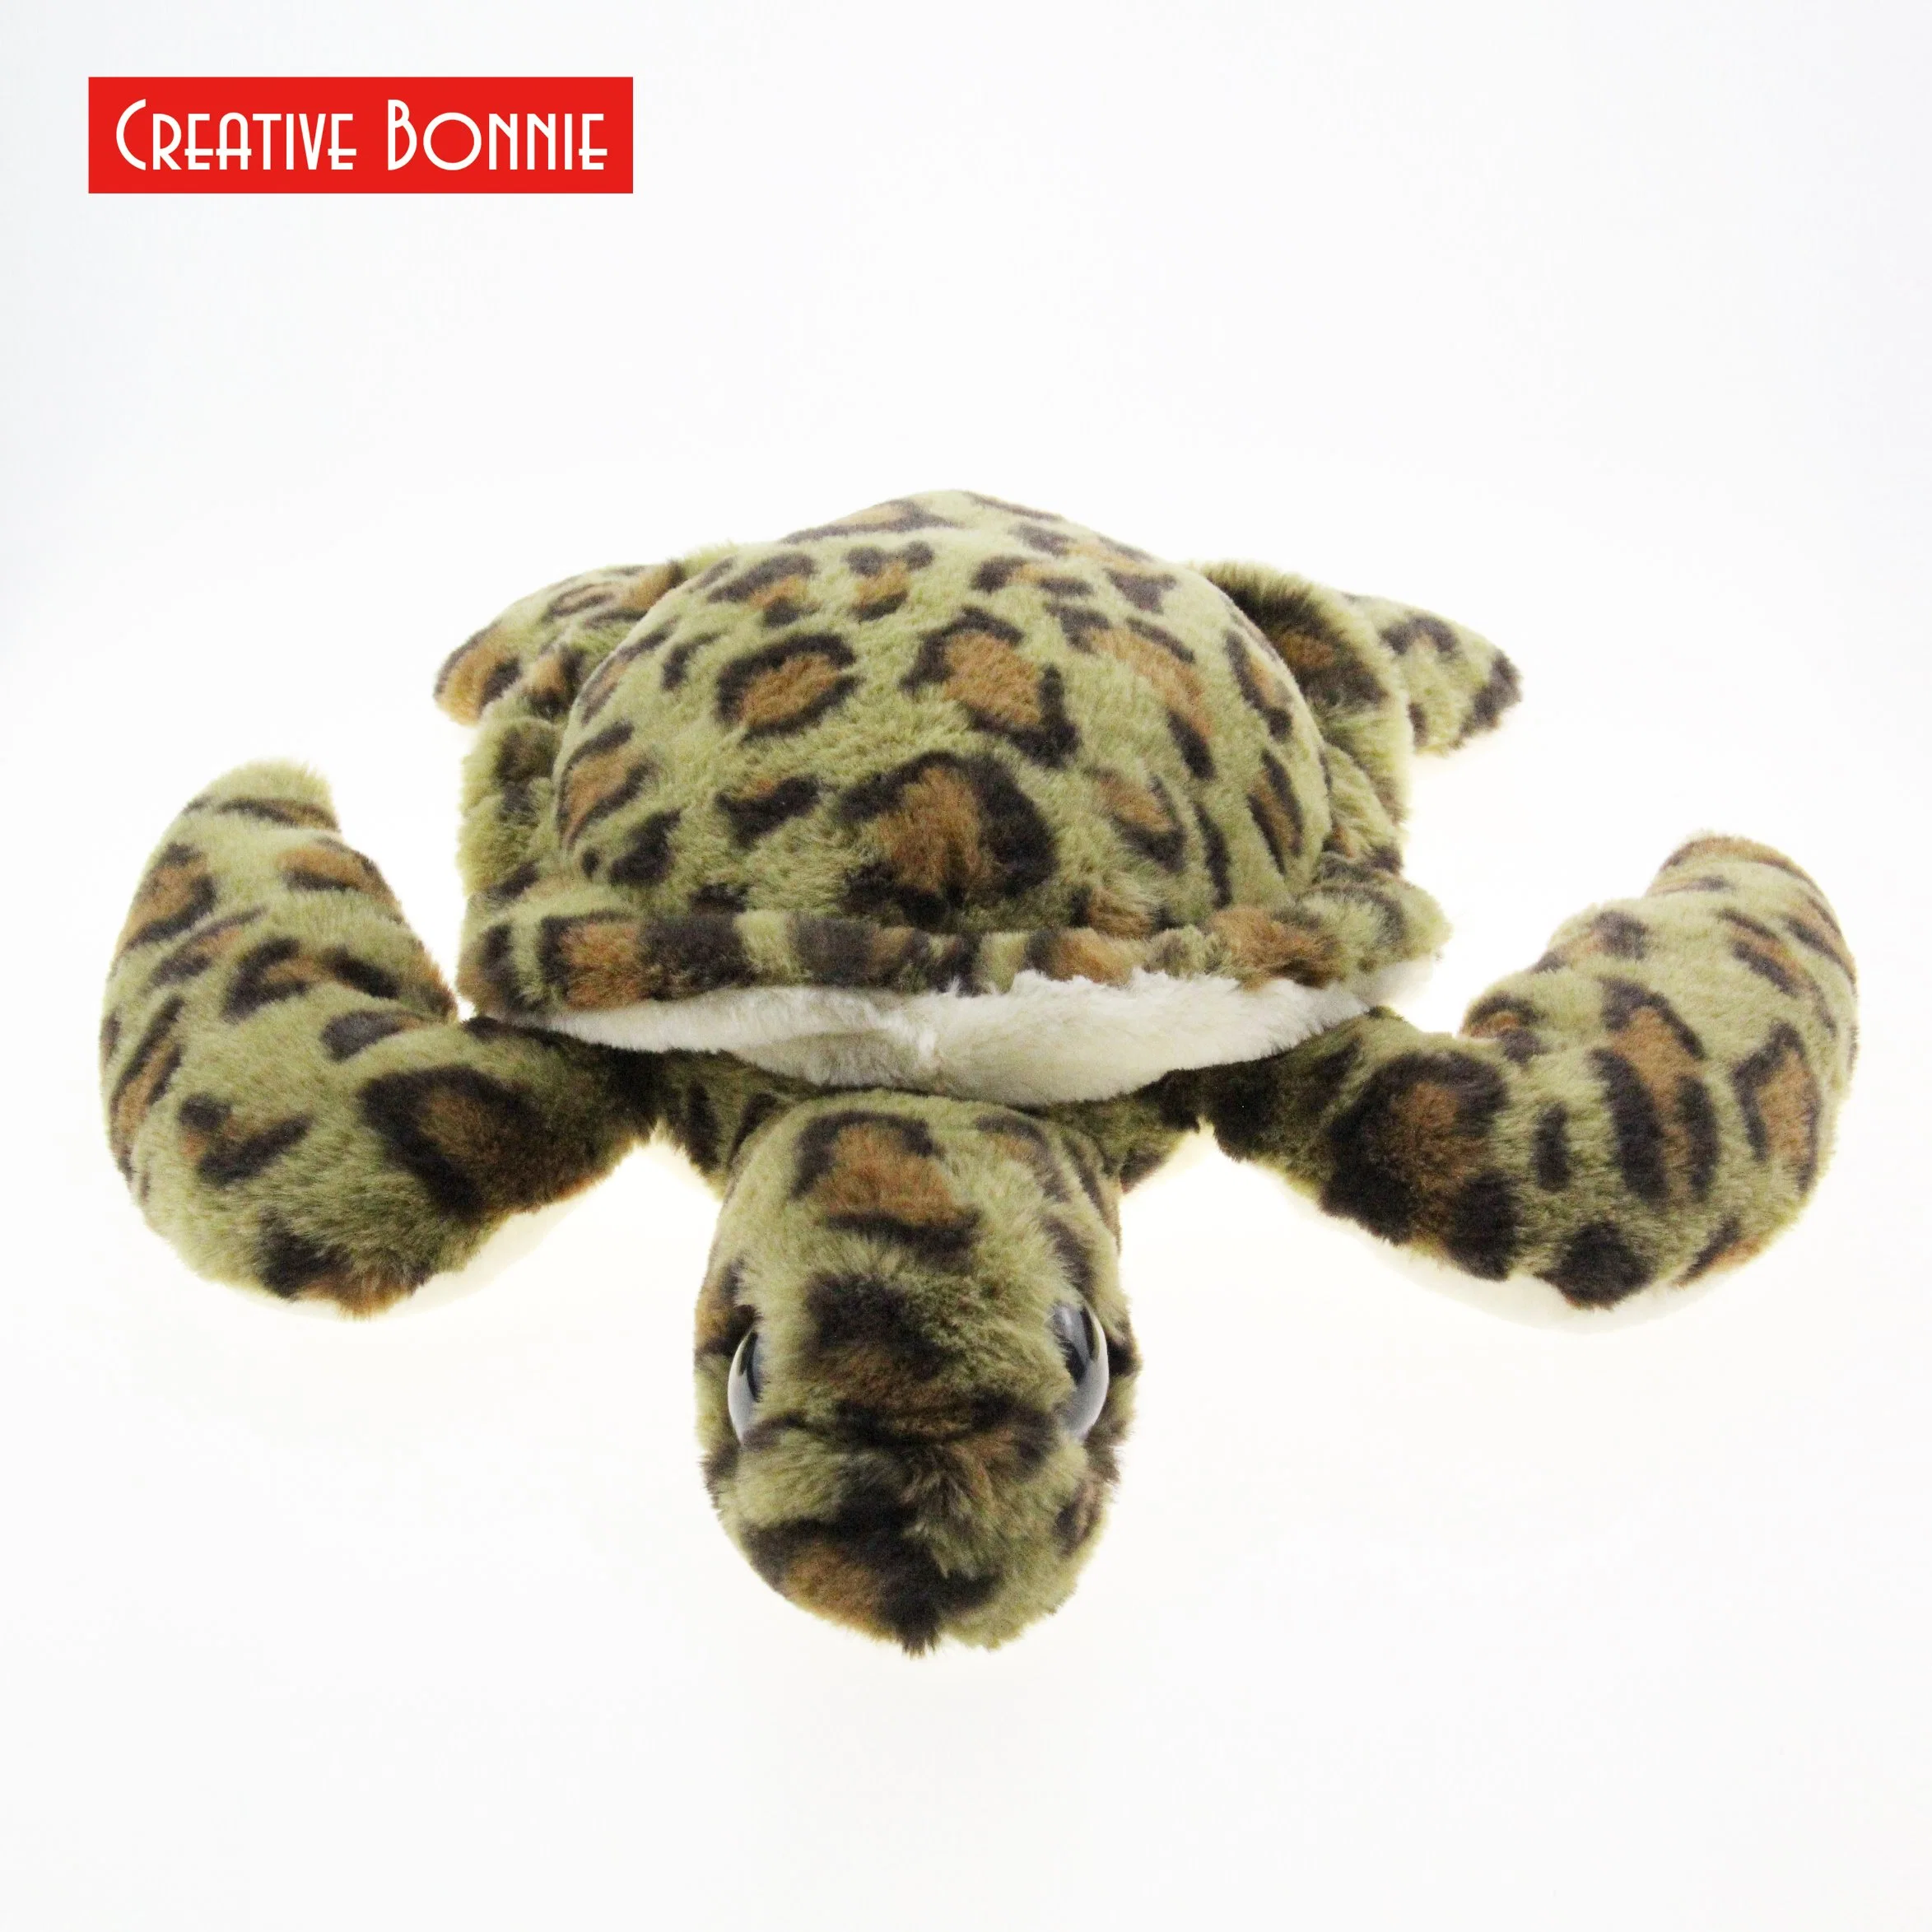 Sea Tortoise Plush Toys Stuffed Soft PP Cotton Pillow Cushion Turtle